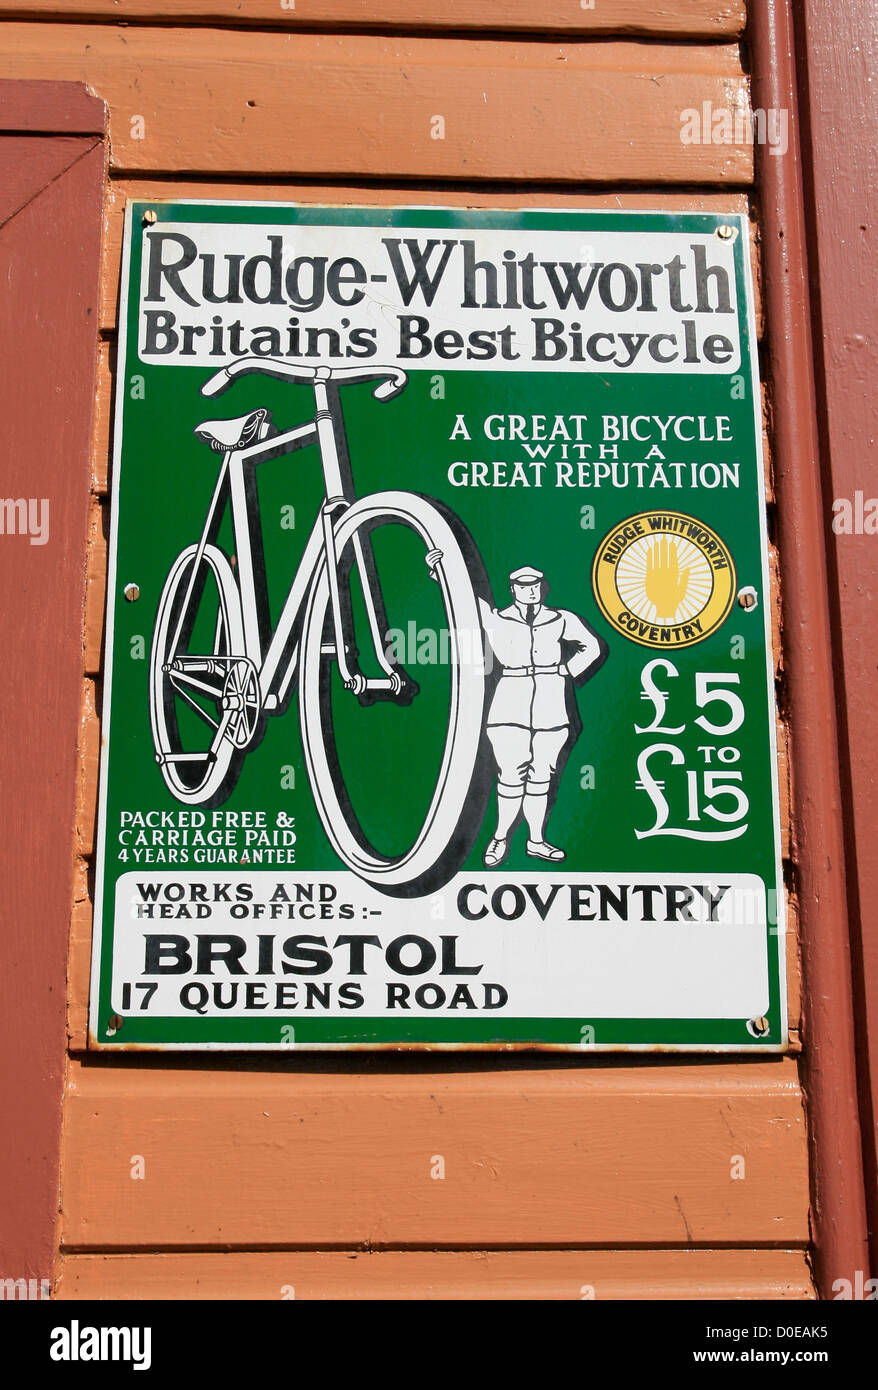 Rudge-Whitworth bicycle advertisement Severn Valley Railway Hampton Loade Shropshire England UK Stock Photo